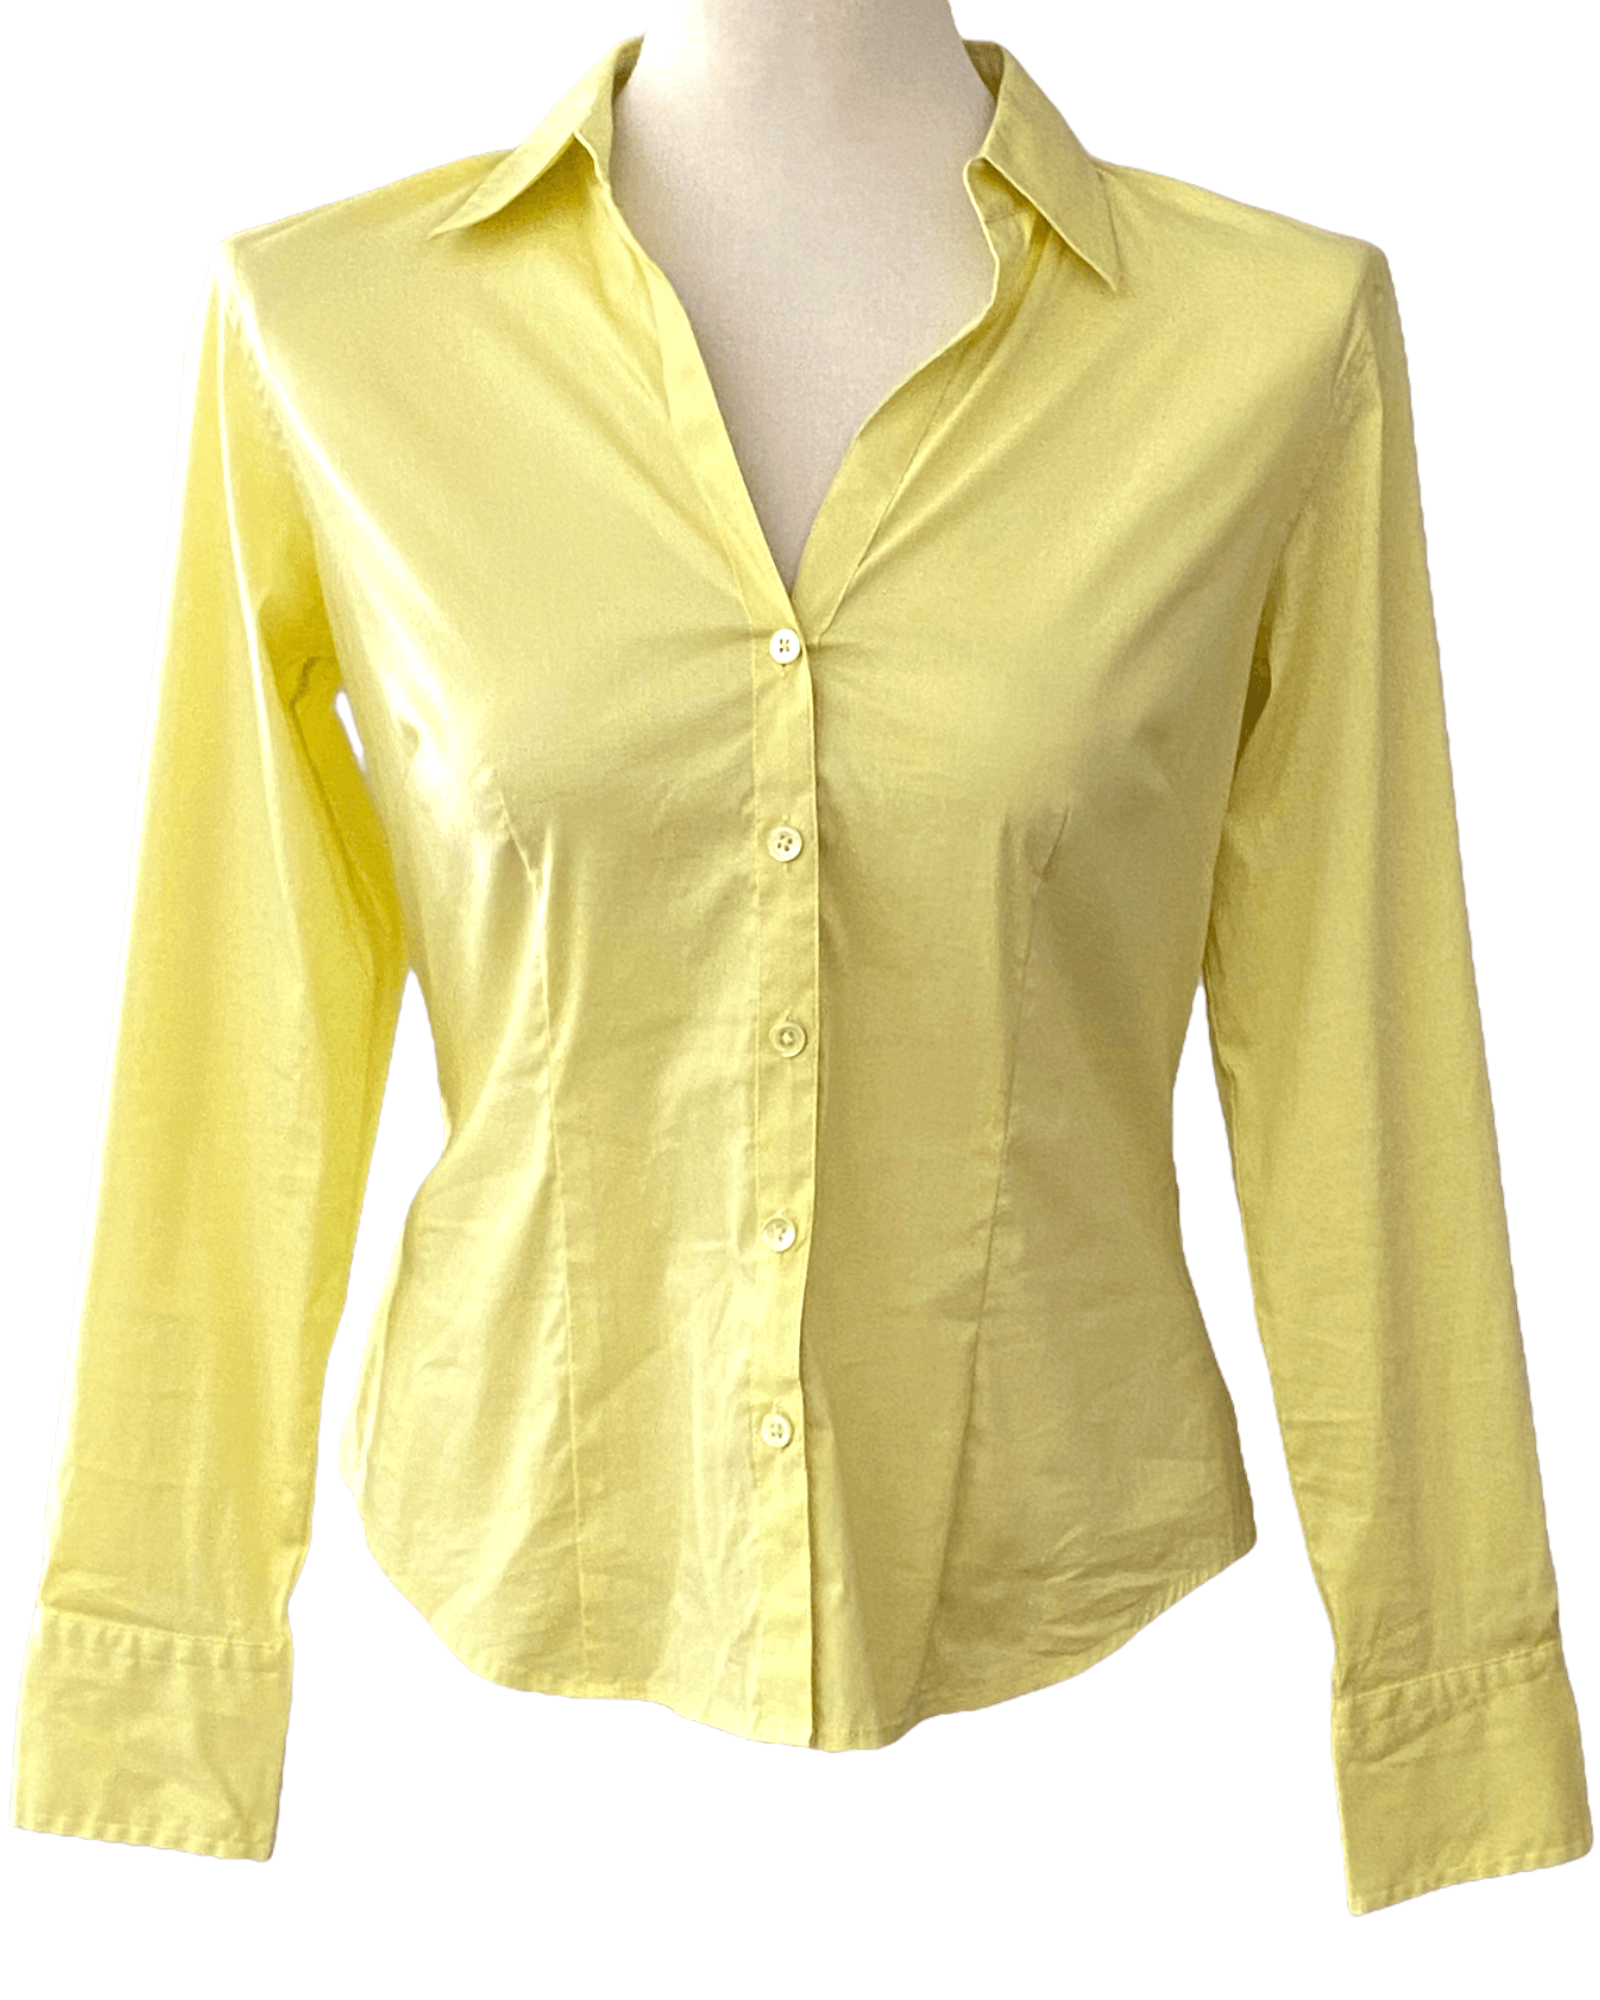 Warm Spring ANN TAYLOR yellow button down shirt